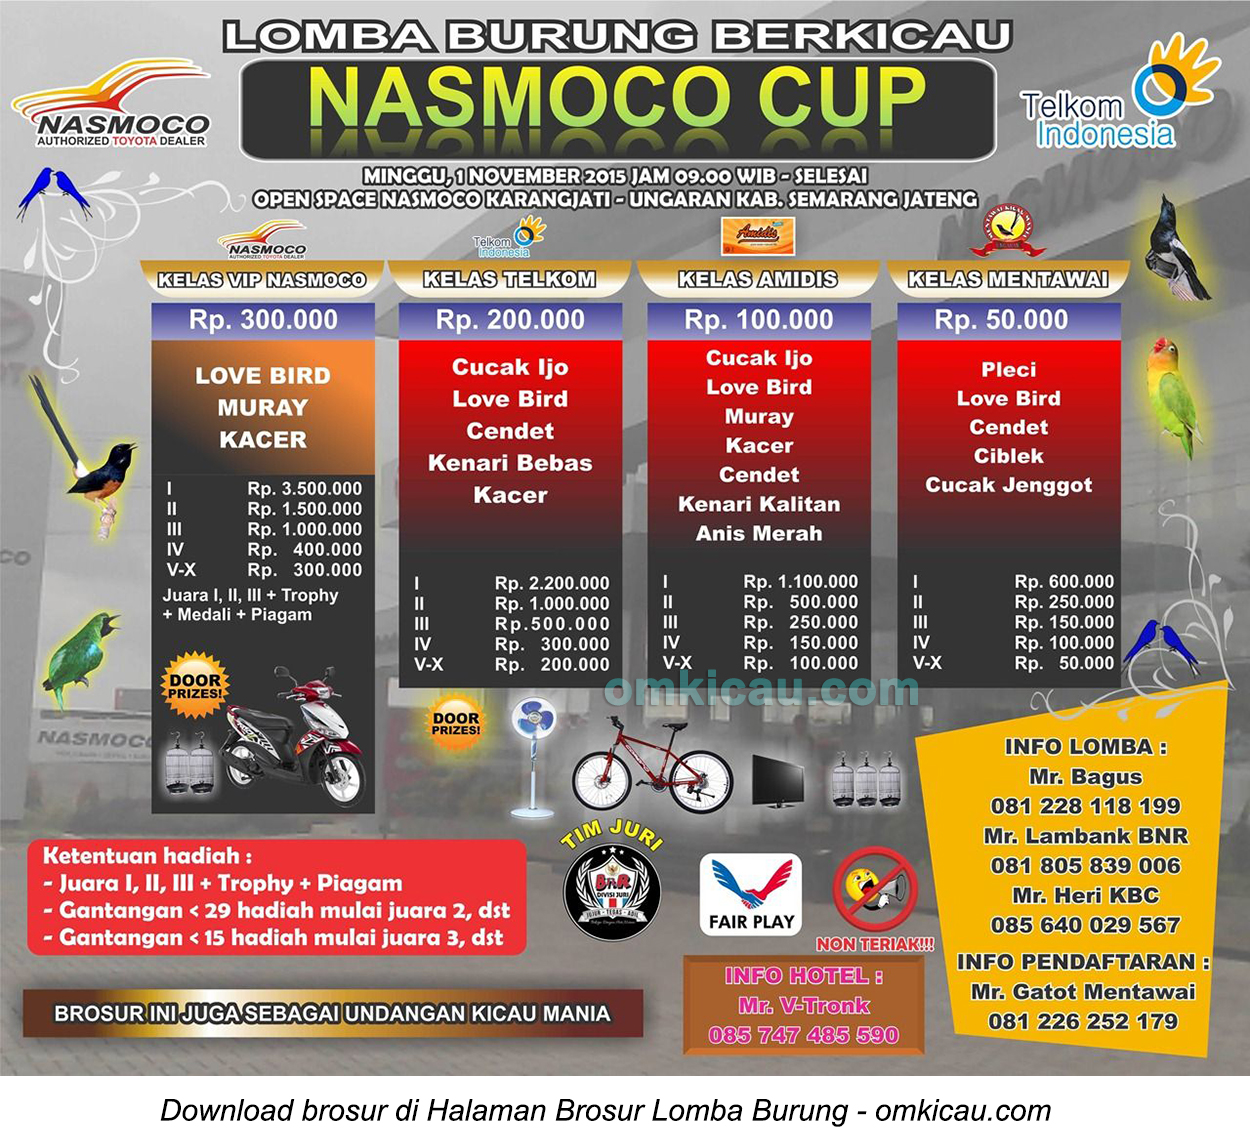 Brosur Lomba Burung Berkicau Nasmoco Cup, Ungaran, 1 November 2015